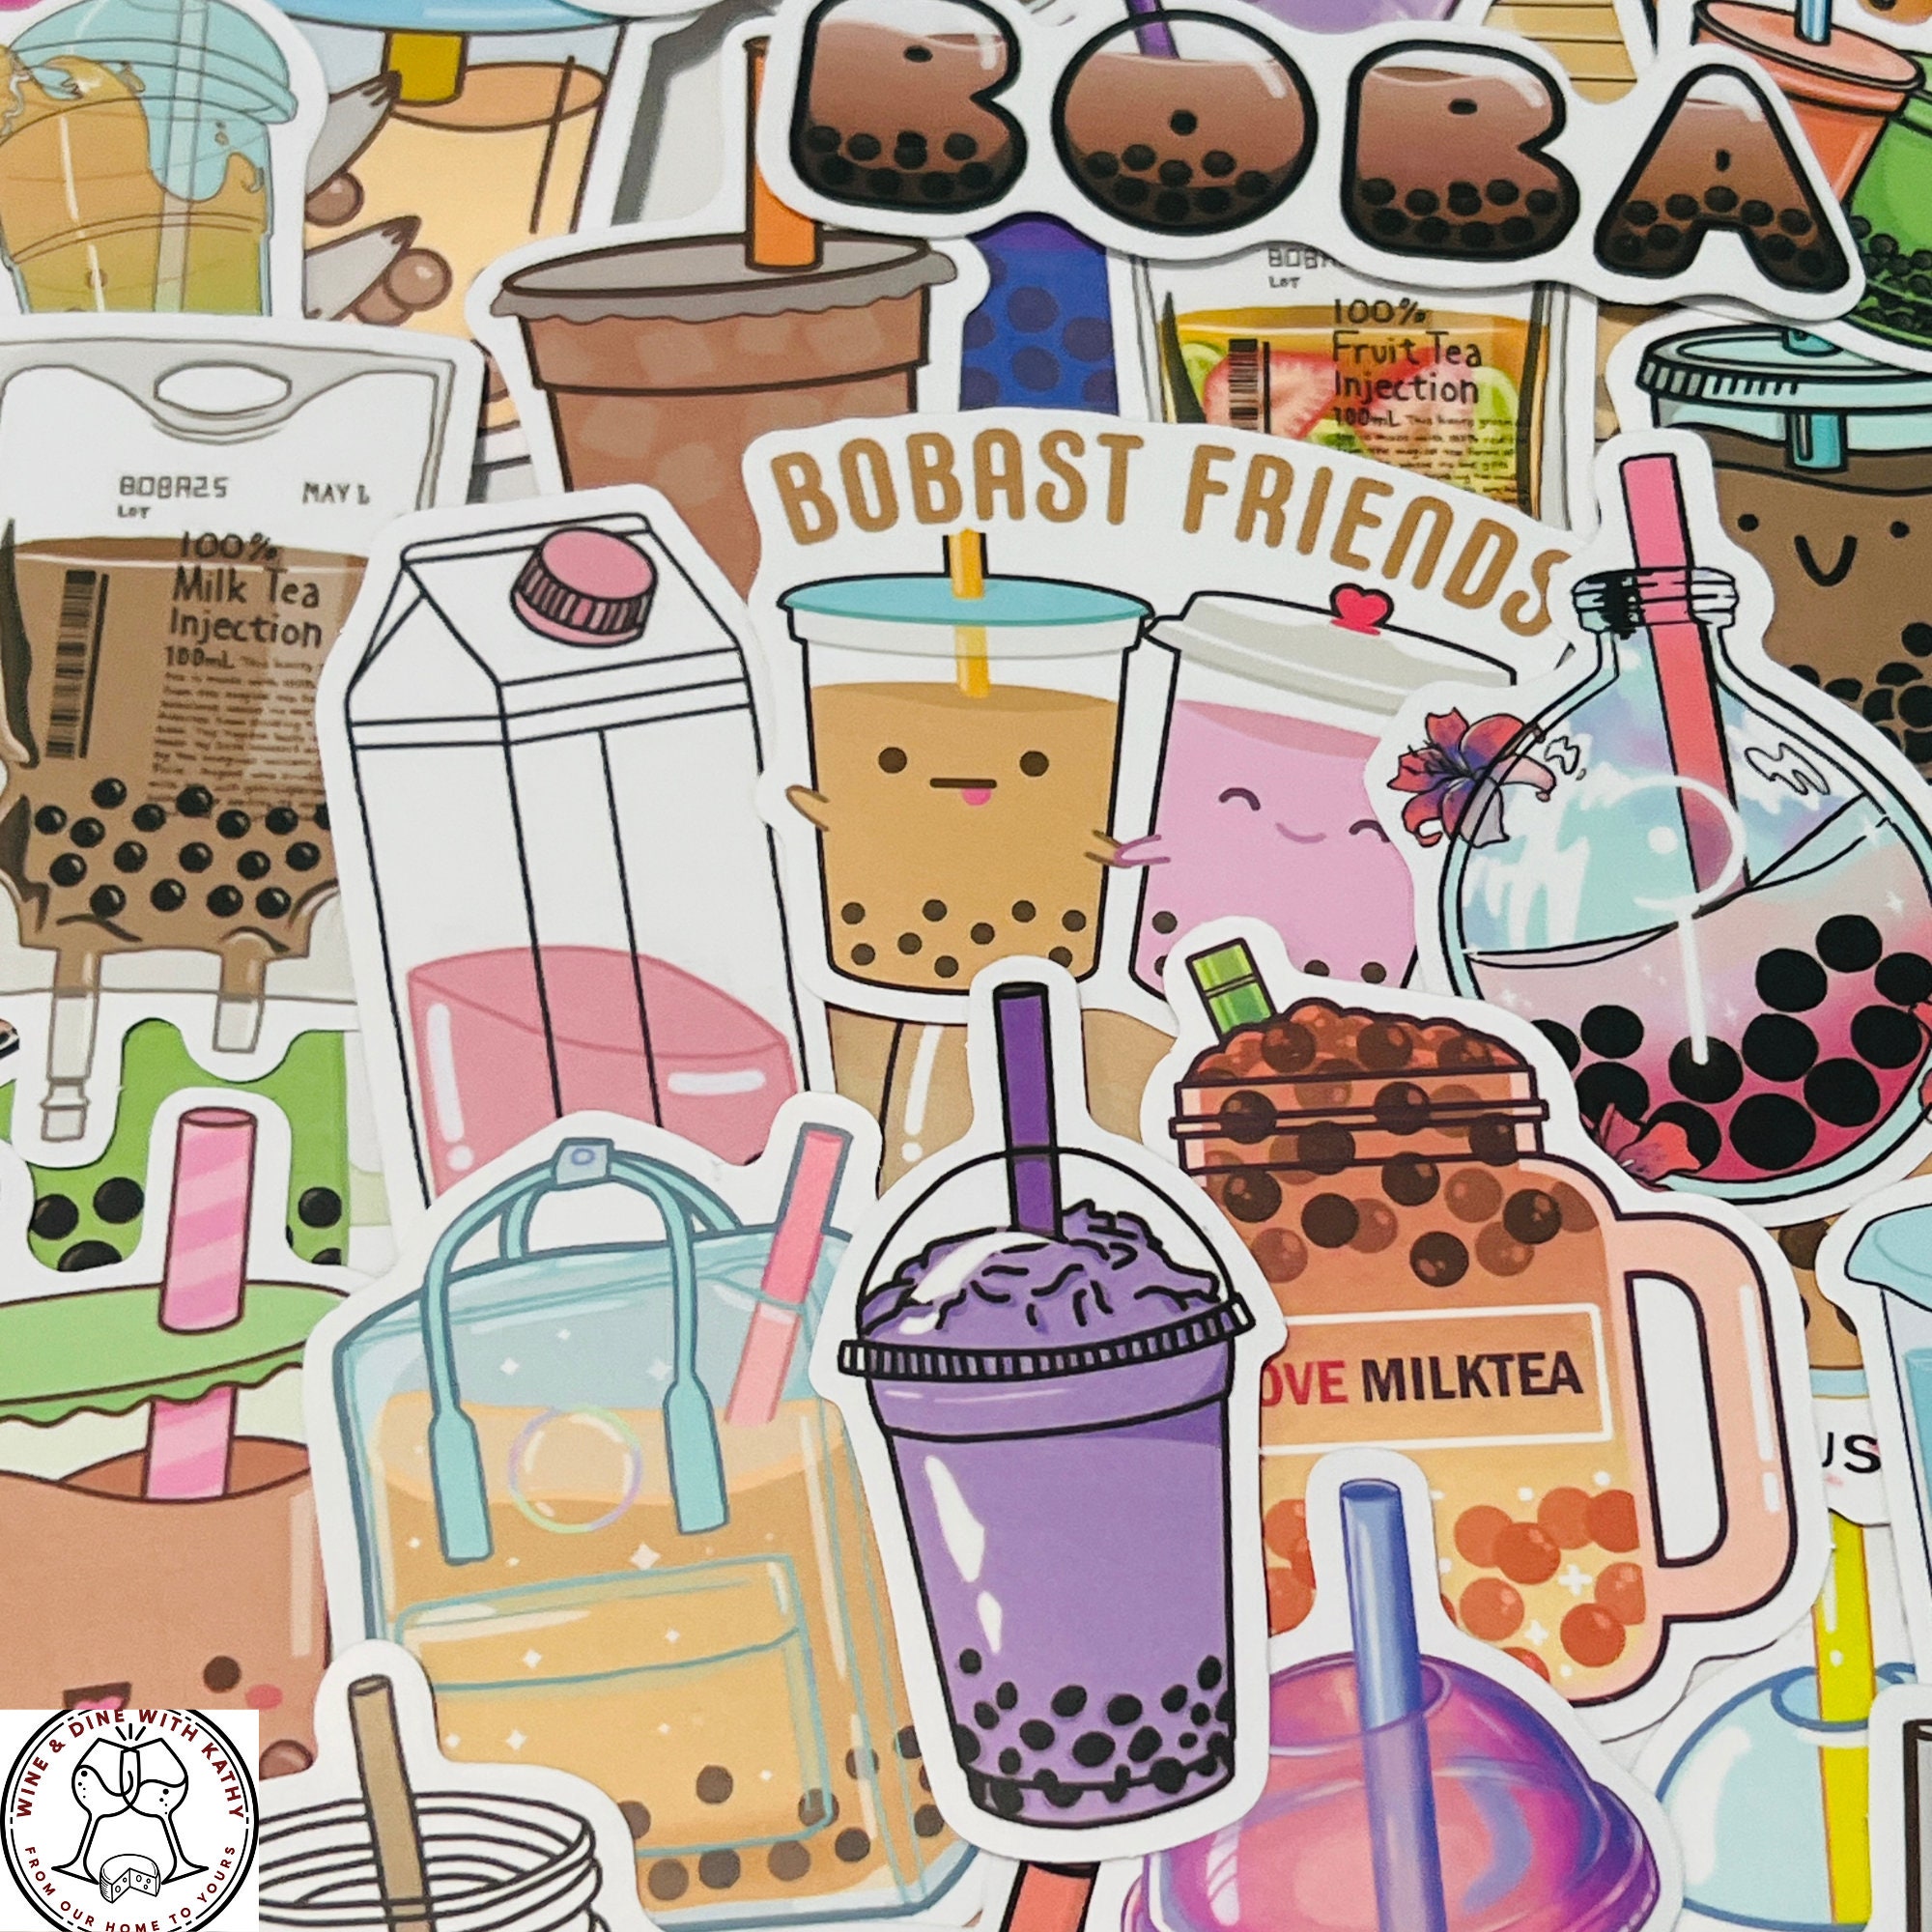 Bubble Tea Sticker Sheet — Marigona Suli